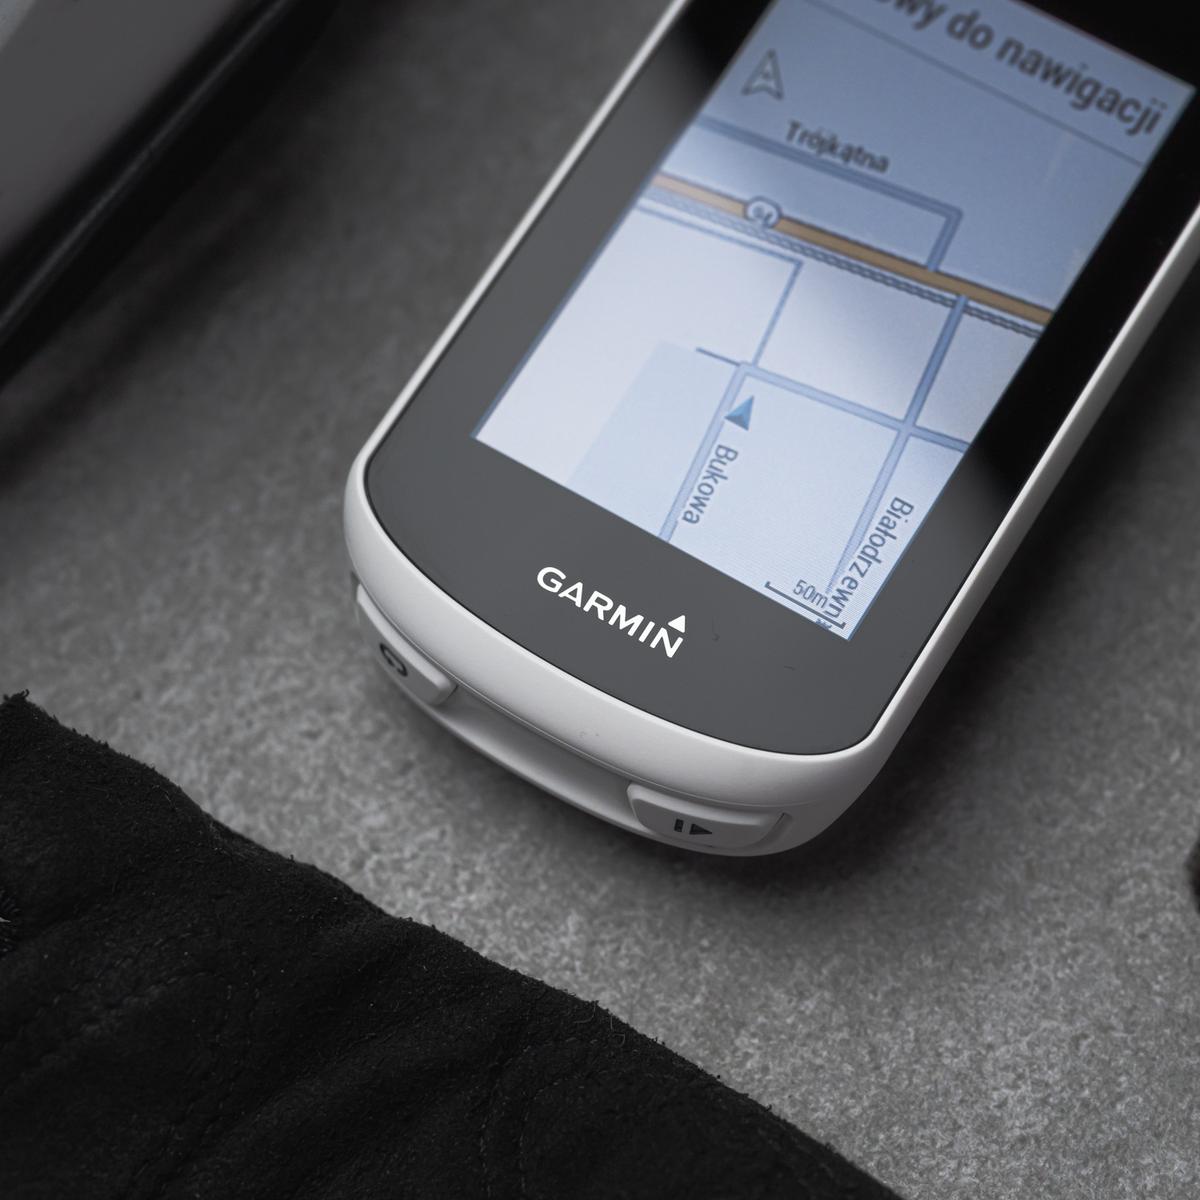 Garmin Edge Explore - recenzja. Dobra nawigacja GPS na rower class="wp-image-975778" title="Garmin Edge Explore - recenzja. Dobra nawigacja GPS na rower" 